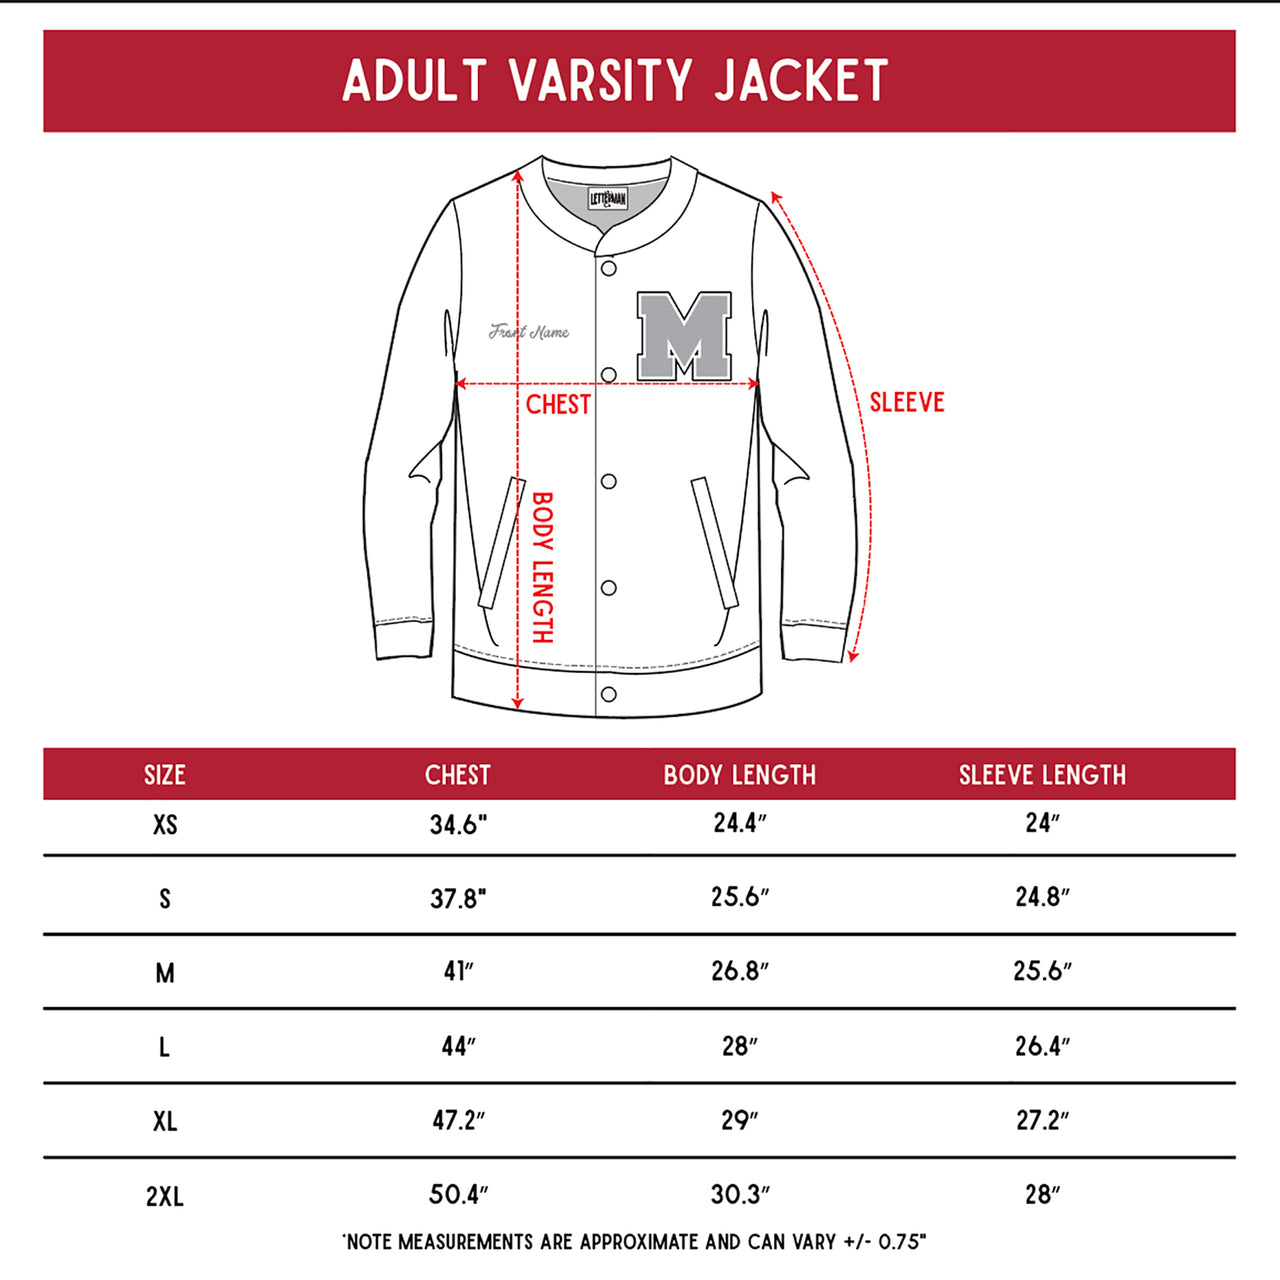 Adult Sweatshirt Varsity Jacket BLACK/YELLOW